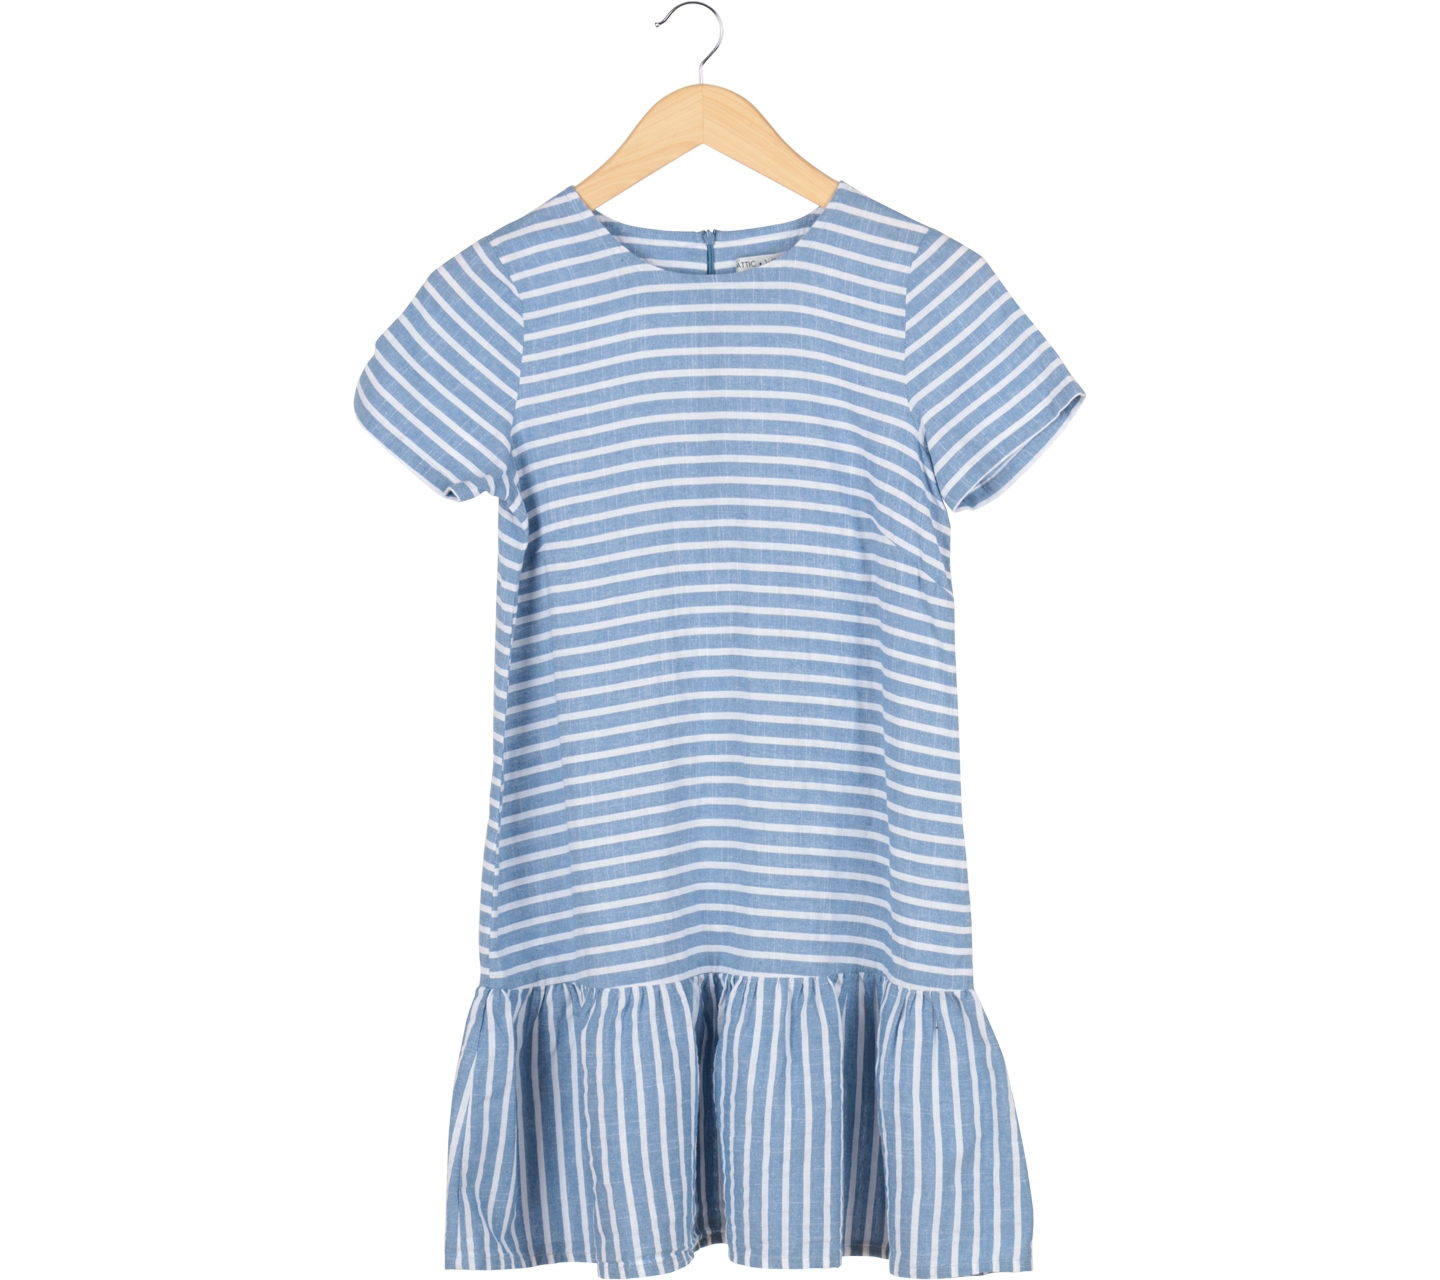 Attic + Willow Blue And White Striped Mini Dress